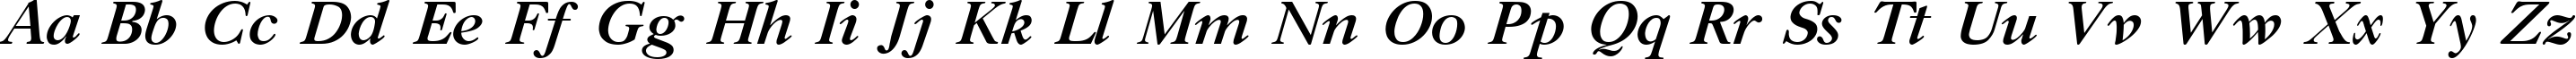 Пример написания английского алфавита шрифтом GazetaTitul Bold Italic